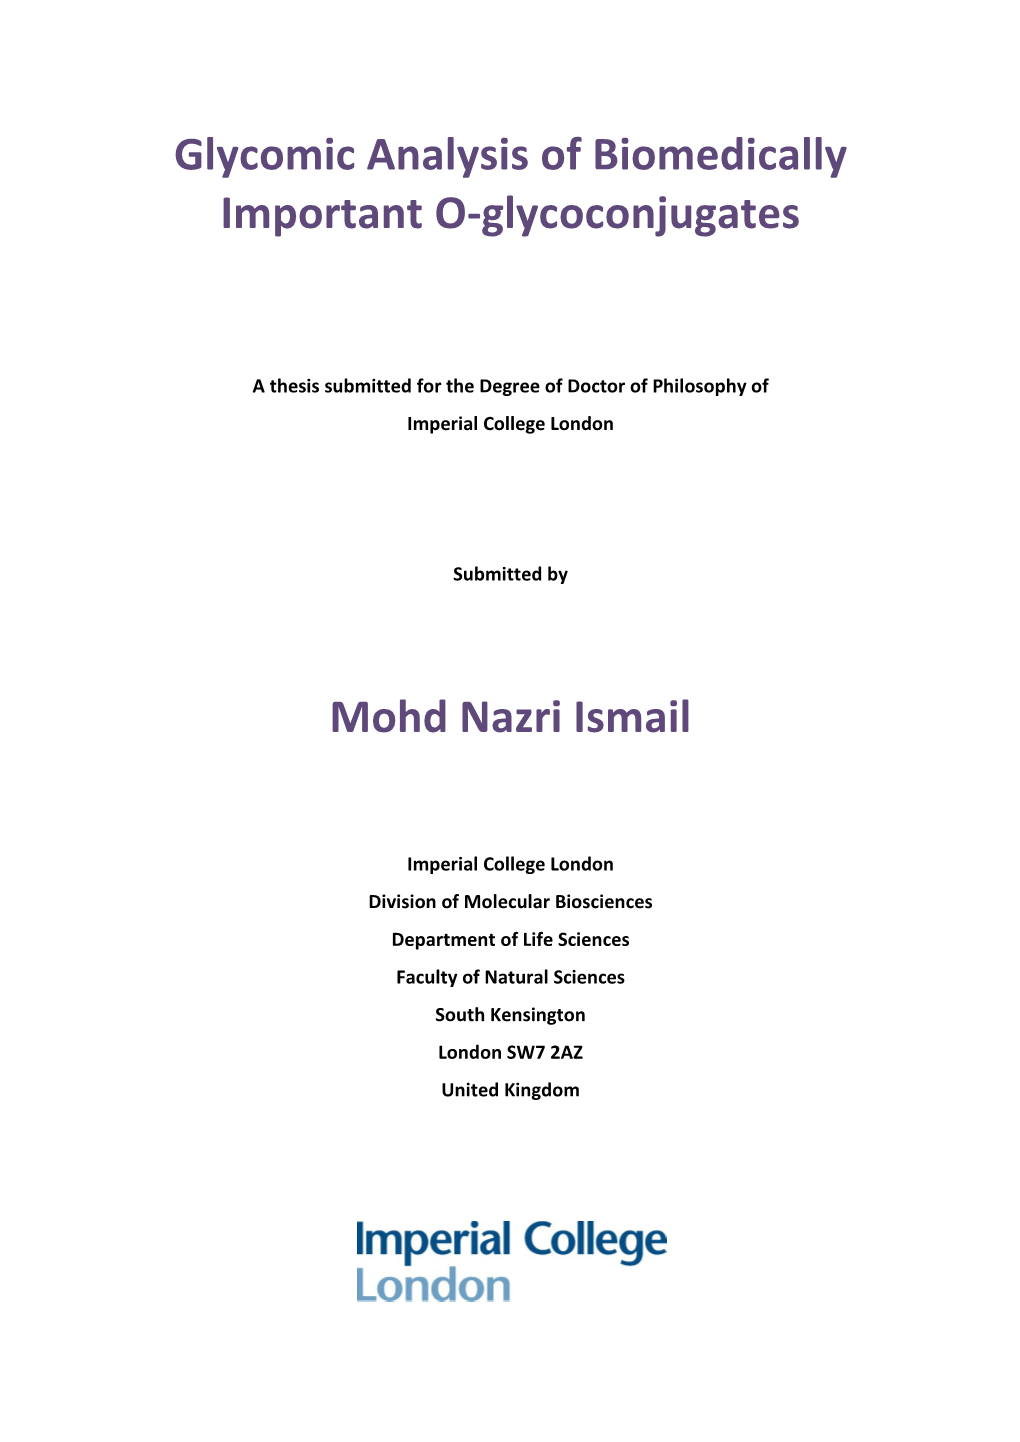 Glycomic Analysis of Biomedically Important O-Glycoconjugates Mohd Nazri Ismail